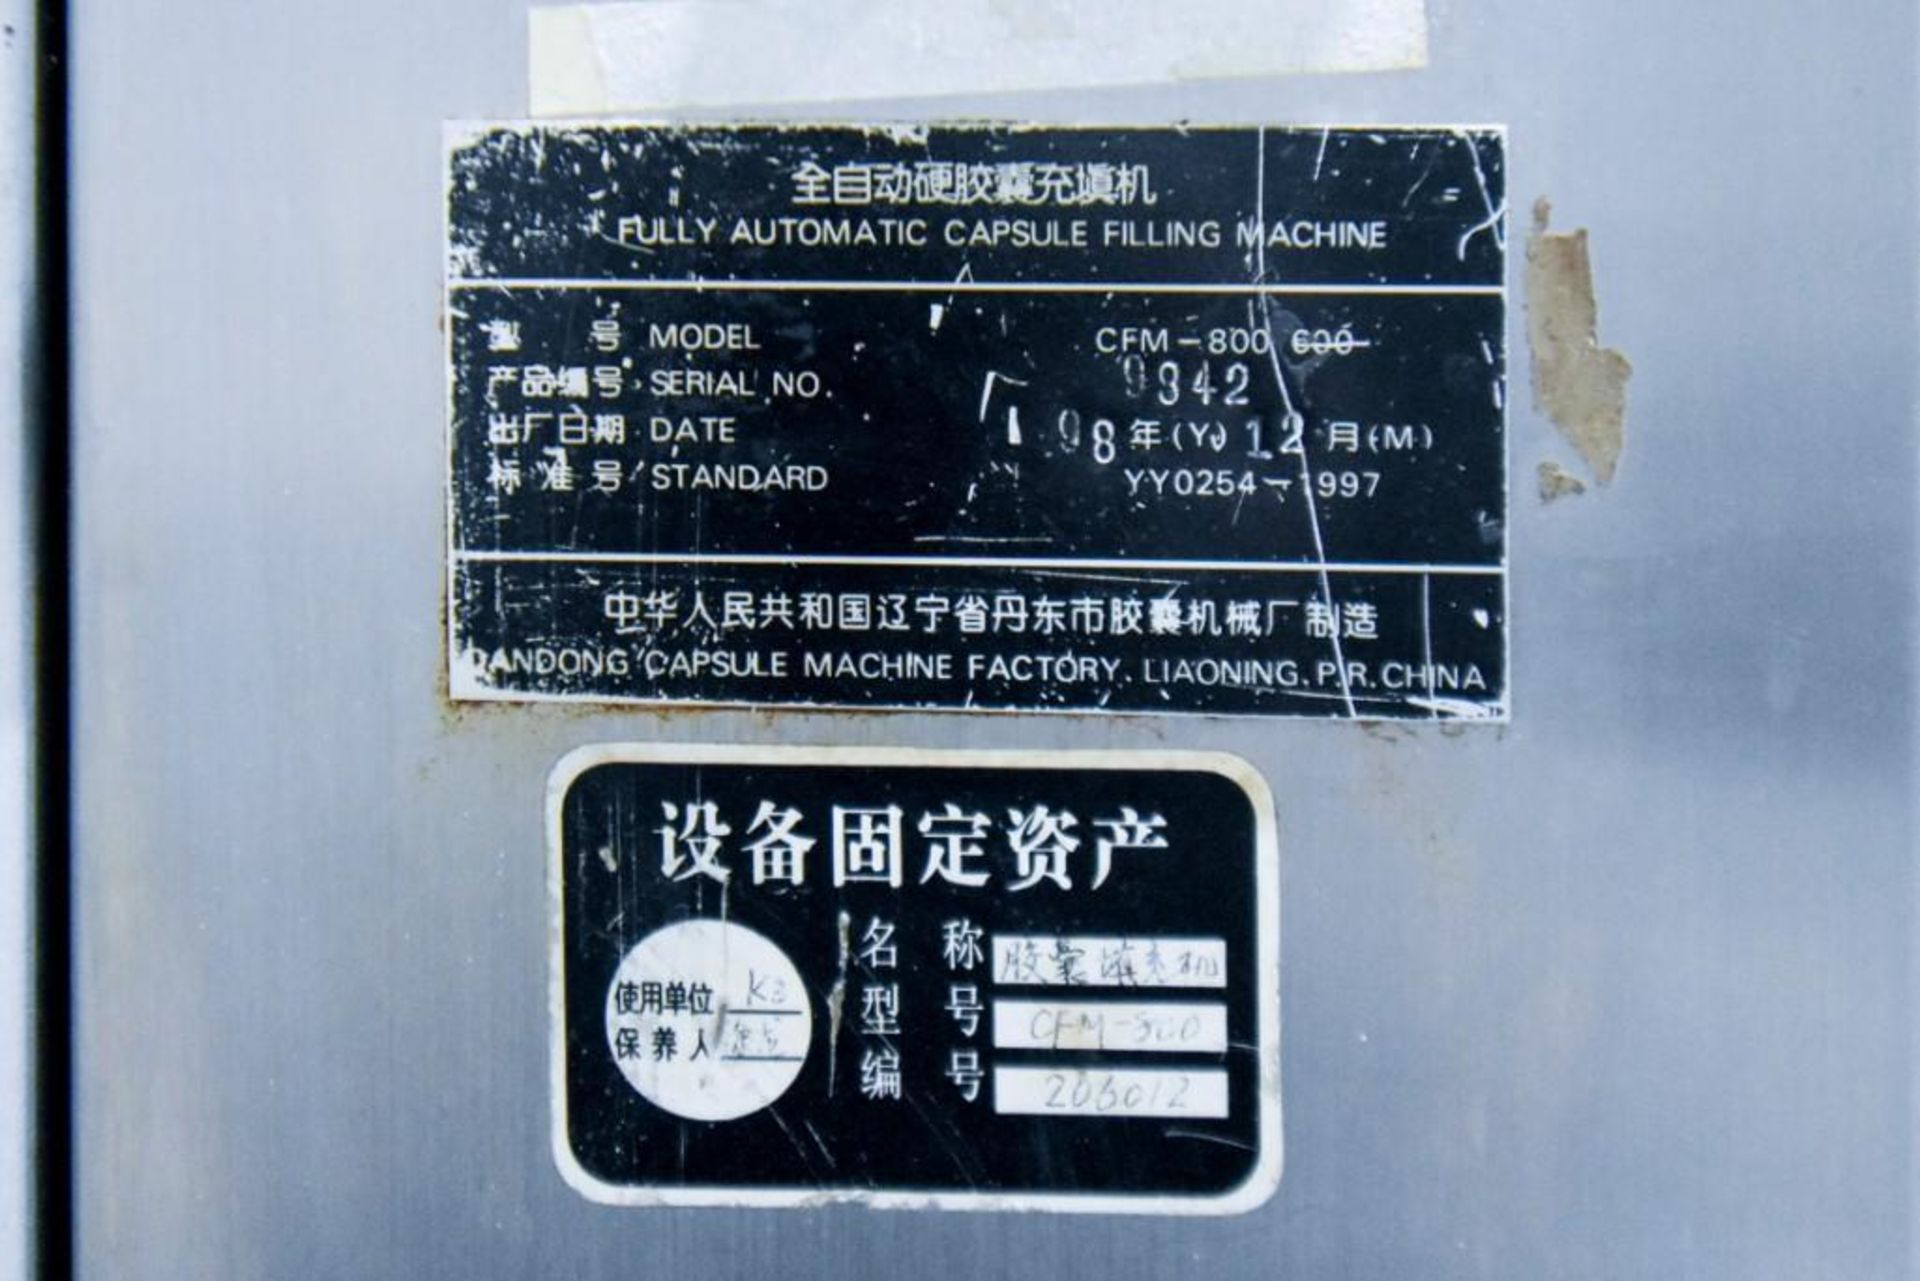 CFM- 800 Automatic Encapsulation Machine with size 0 Tooling - Image 14 of 14